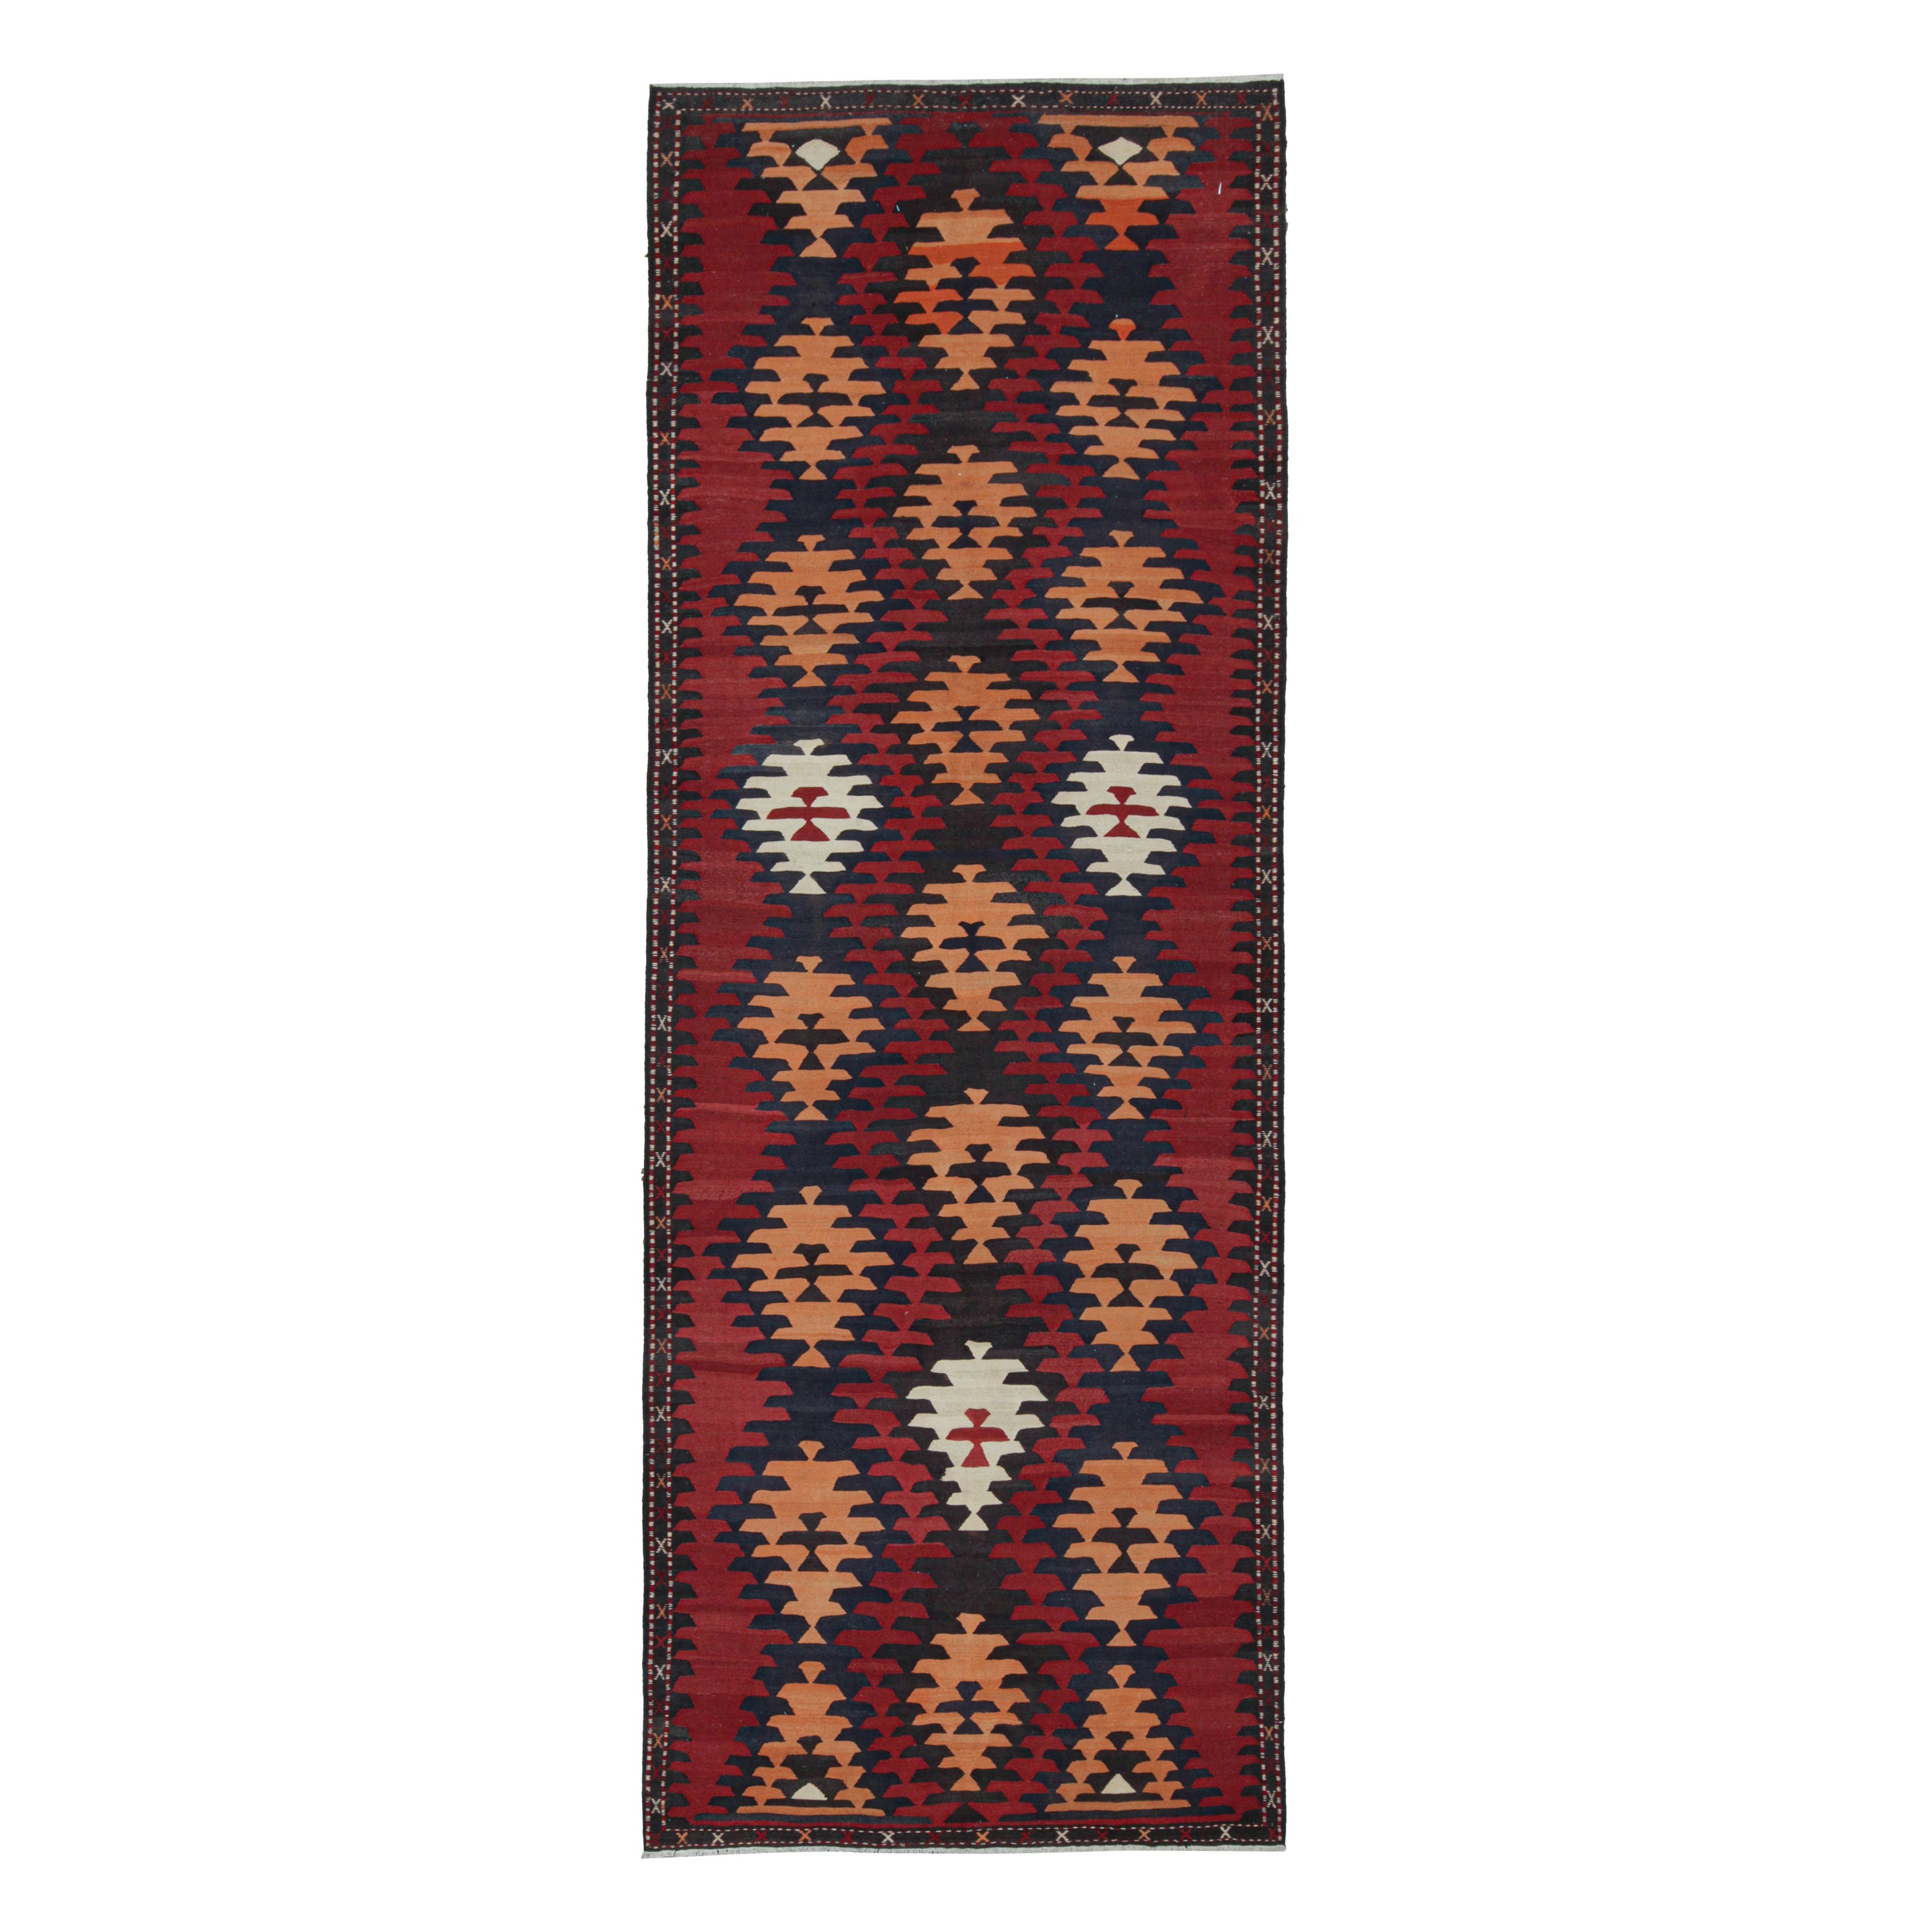 Vintage Karadagh Persian Kilim in Red with Geometric Patterns